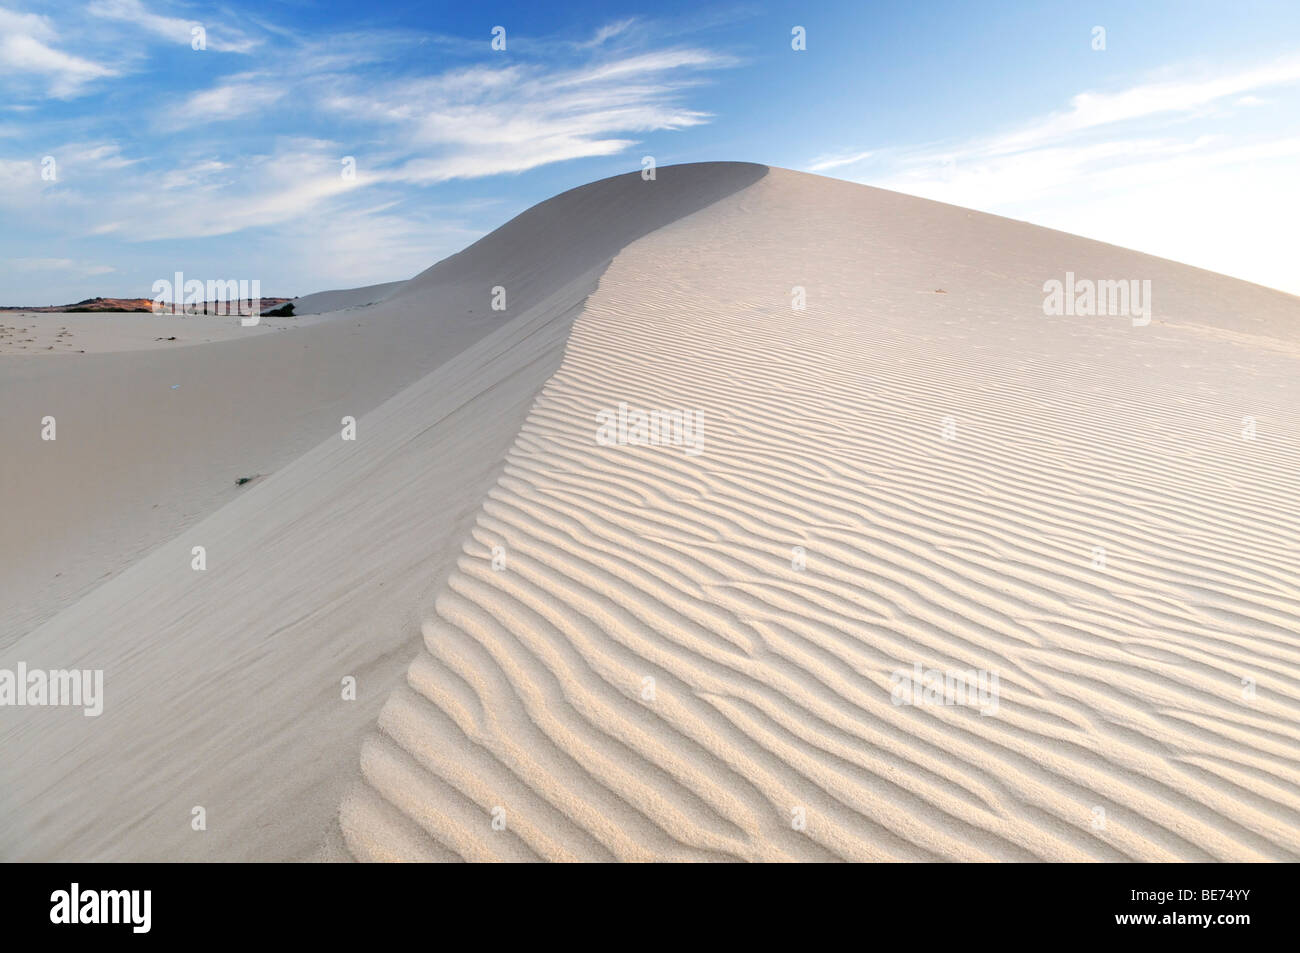 Paisaje desértico y dunas de arena blanca, Bau Ba "Sahara Vietnamita", Bao Trang, Lago Blanco, Vietnam, Asia Foto de stock